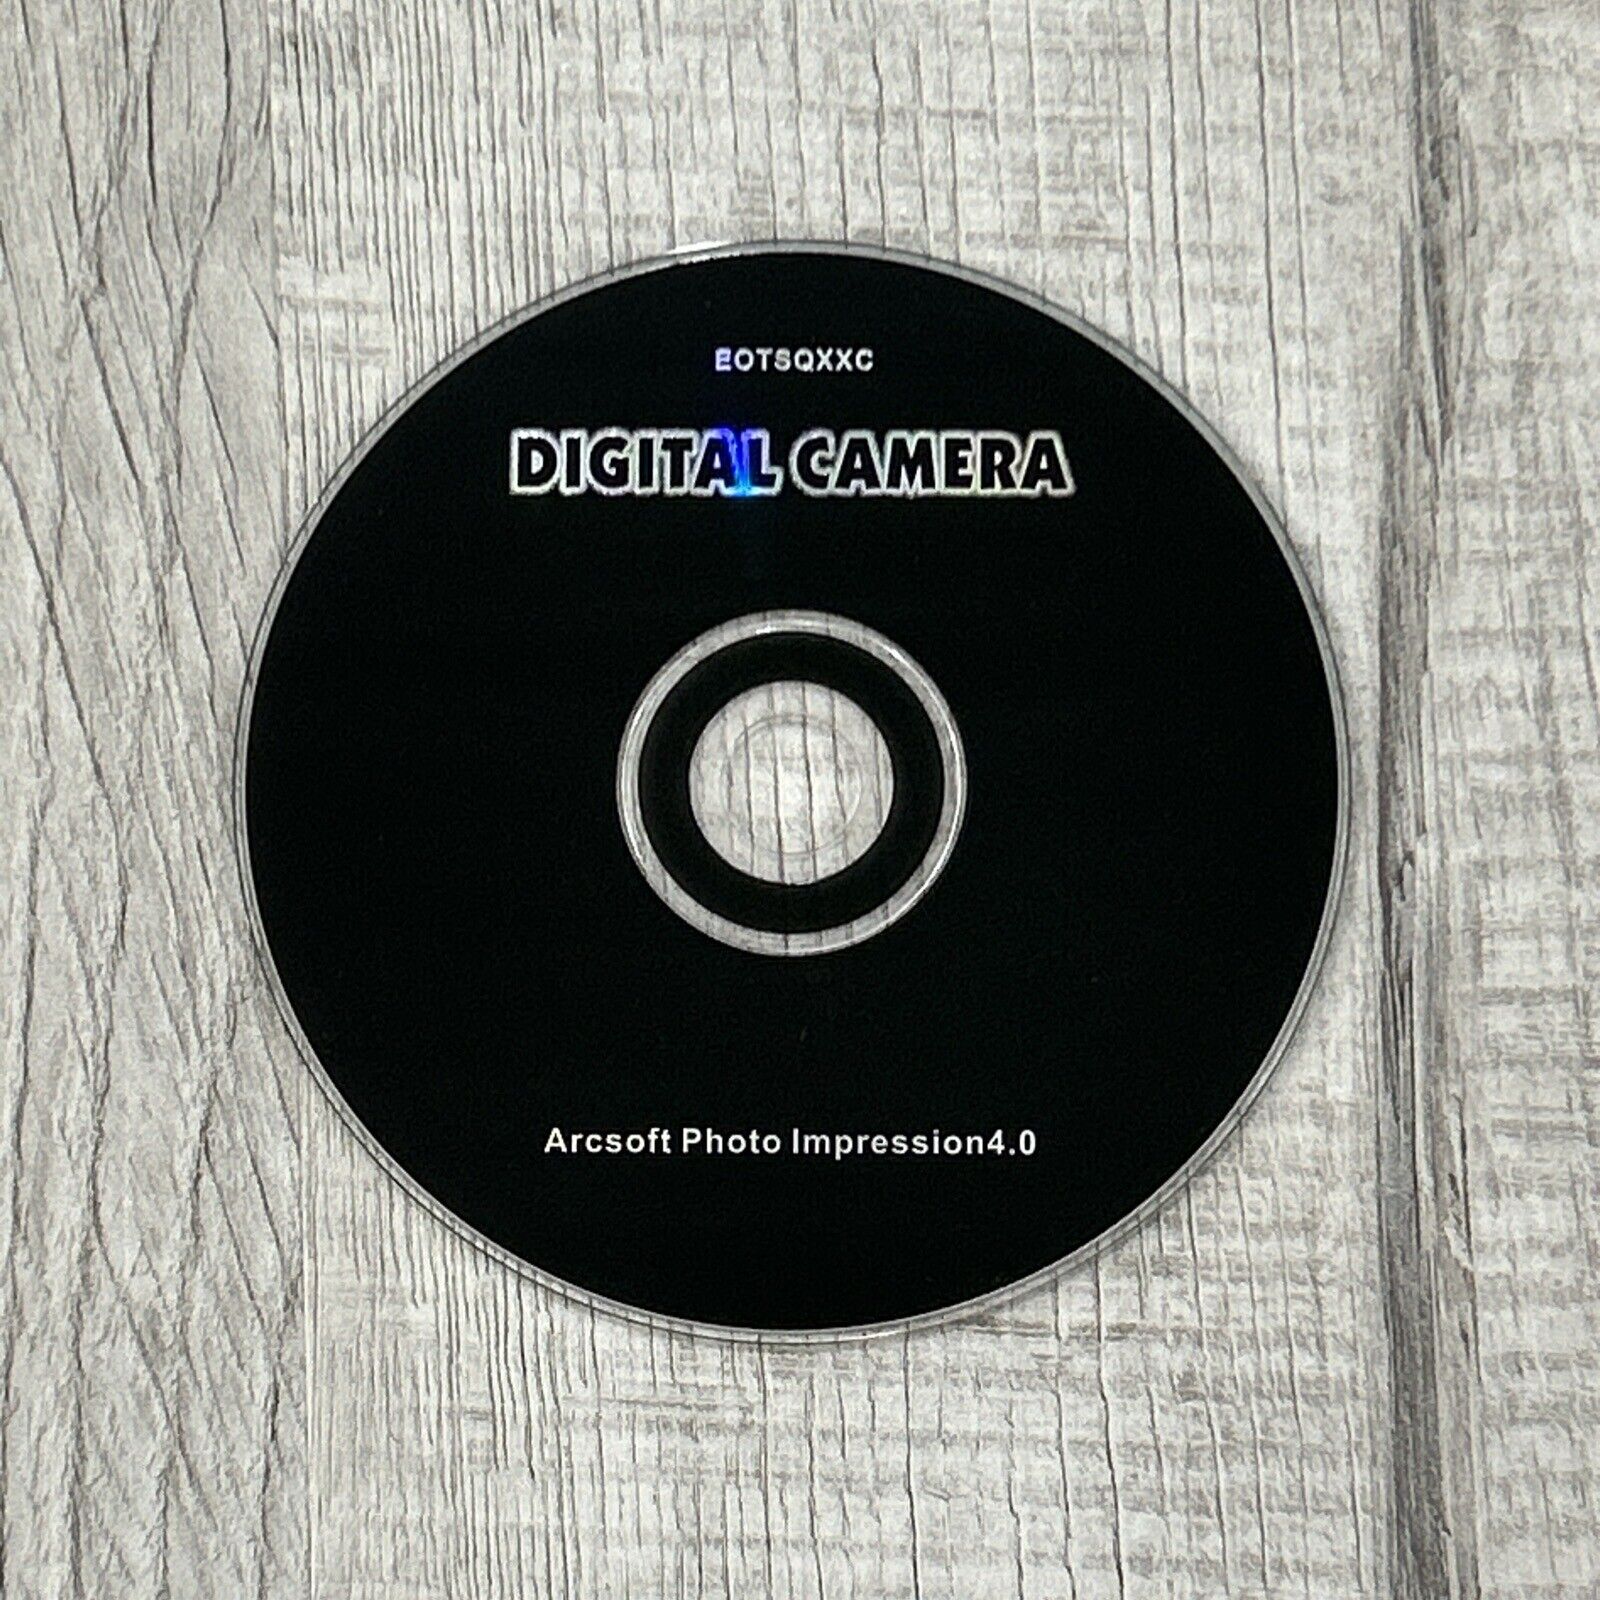 Digital Camera Arcsoft Photo Impression 4.0 CD Software Disk Arc Soft